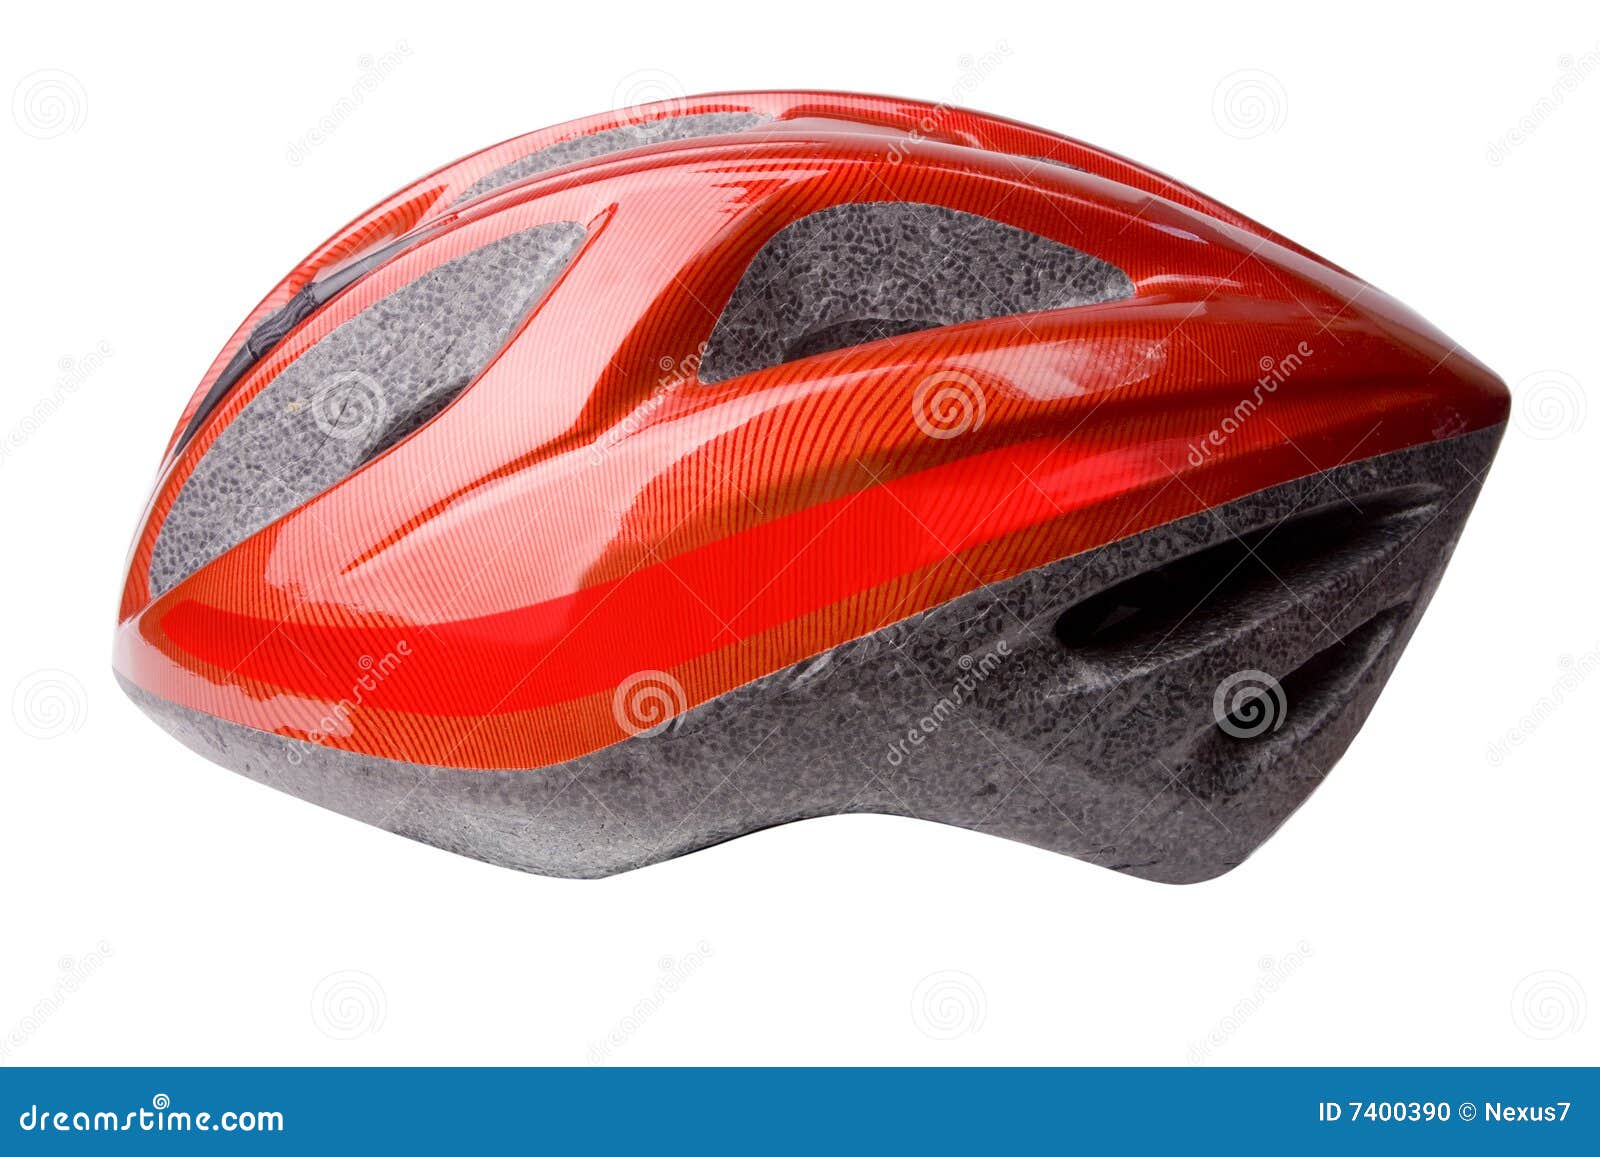 bicycle helmet clip art free - photo #50